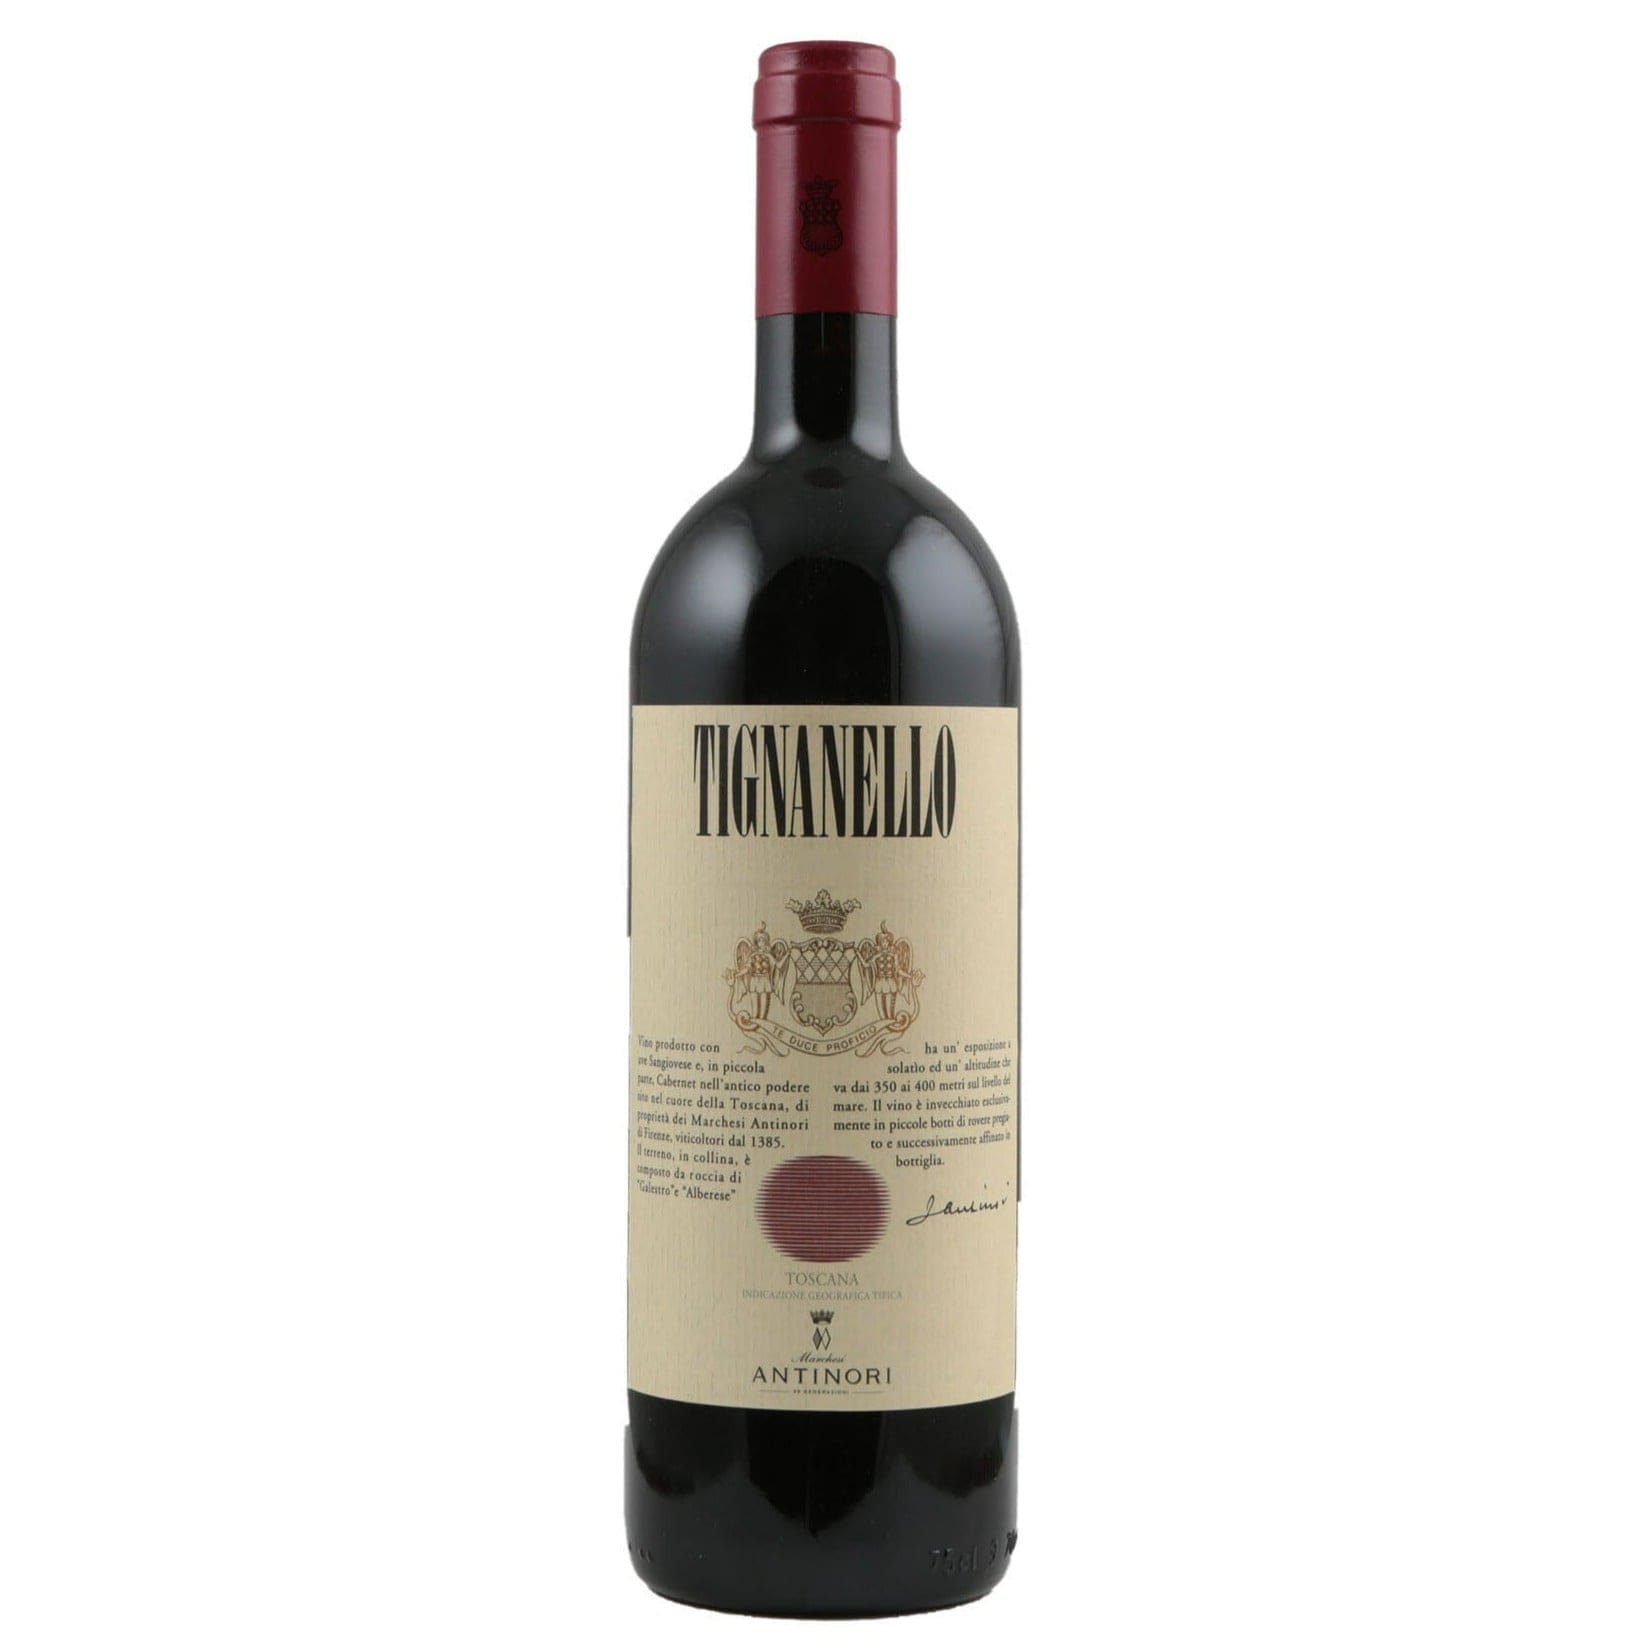 Single bottle of Red wine Marchesi Antinori, Tignanello, Toscana IGT, 2015 80% Sangiovese, 13% Cabernet Sauvignon & 7% Cabernet Franc